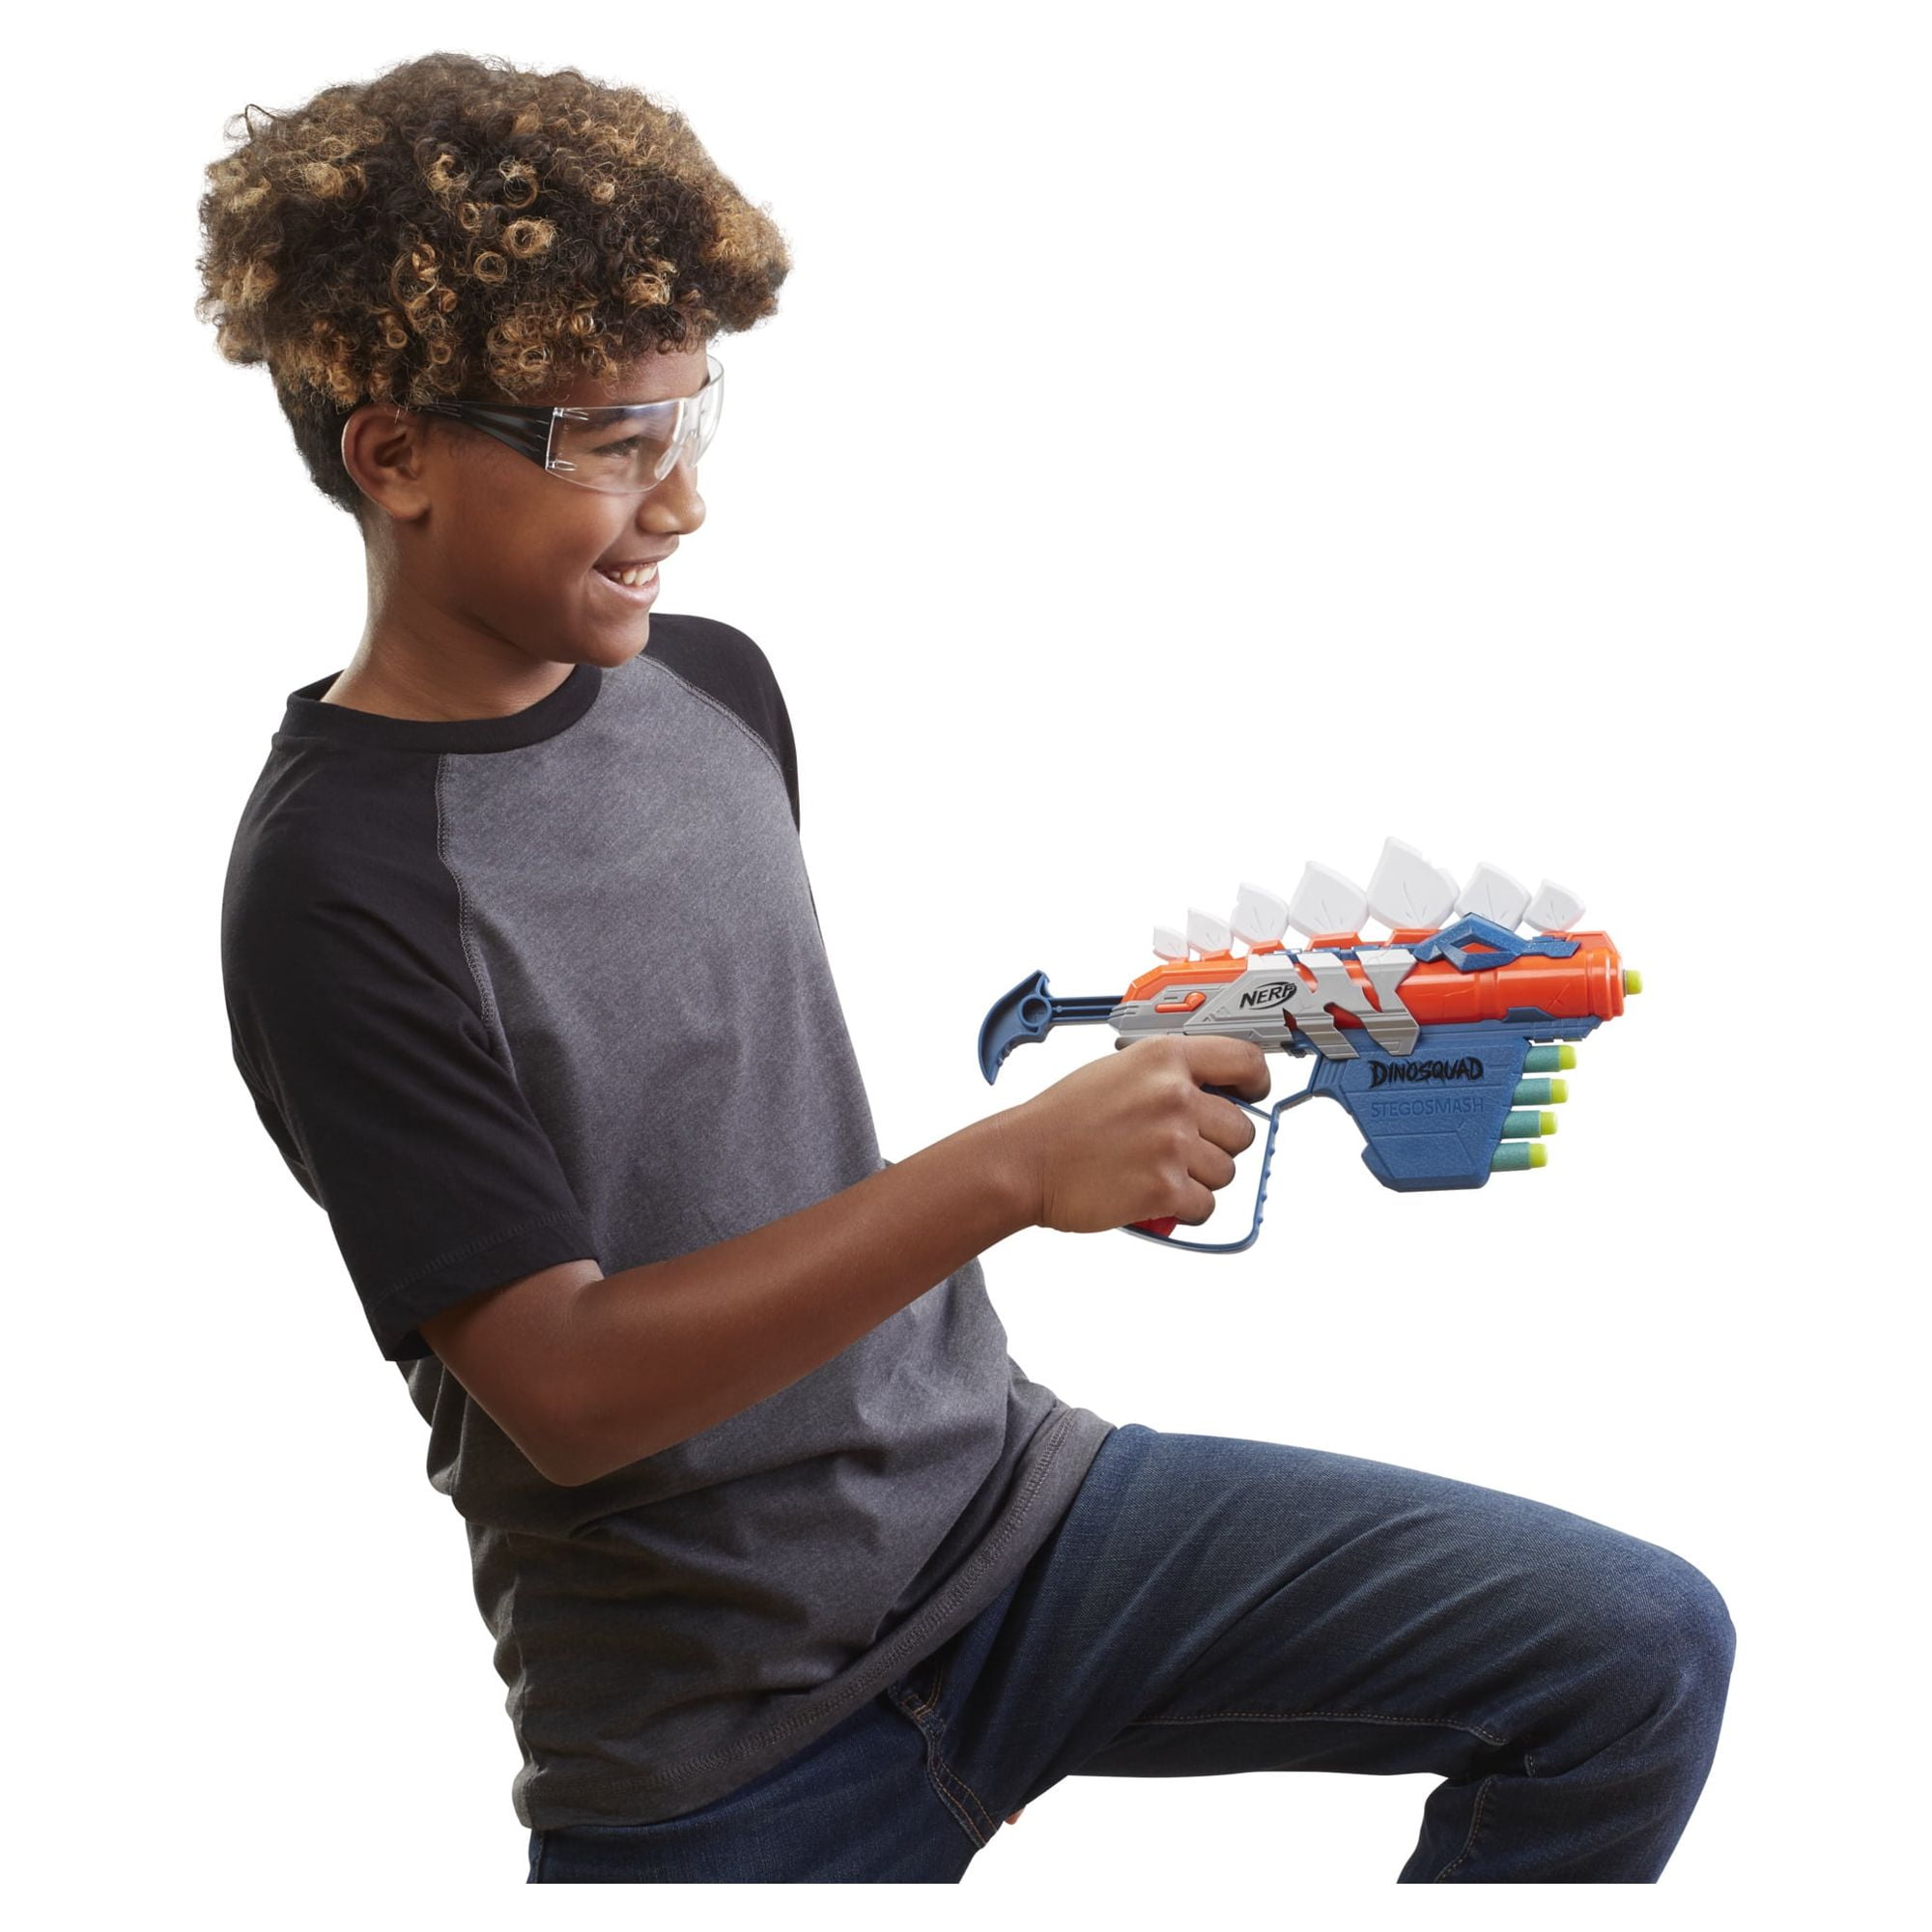 NERF Dinosquad Stegosmash Dart Blaster Ages 8+ Toy Gun Fire Dinosaur Dino  Play